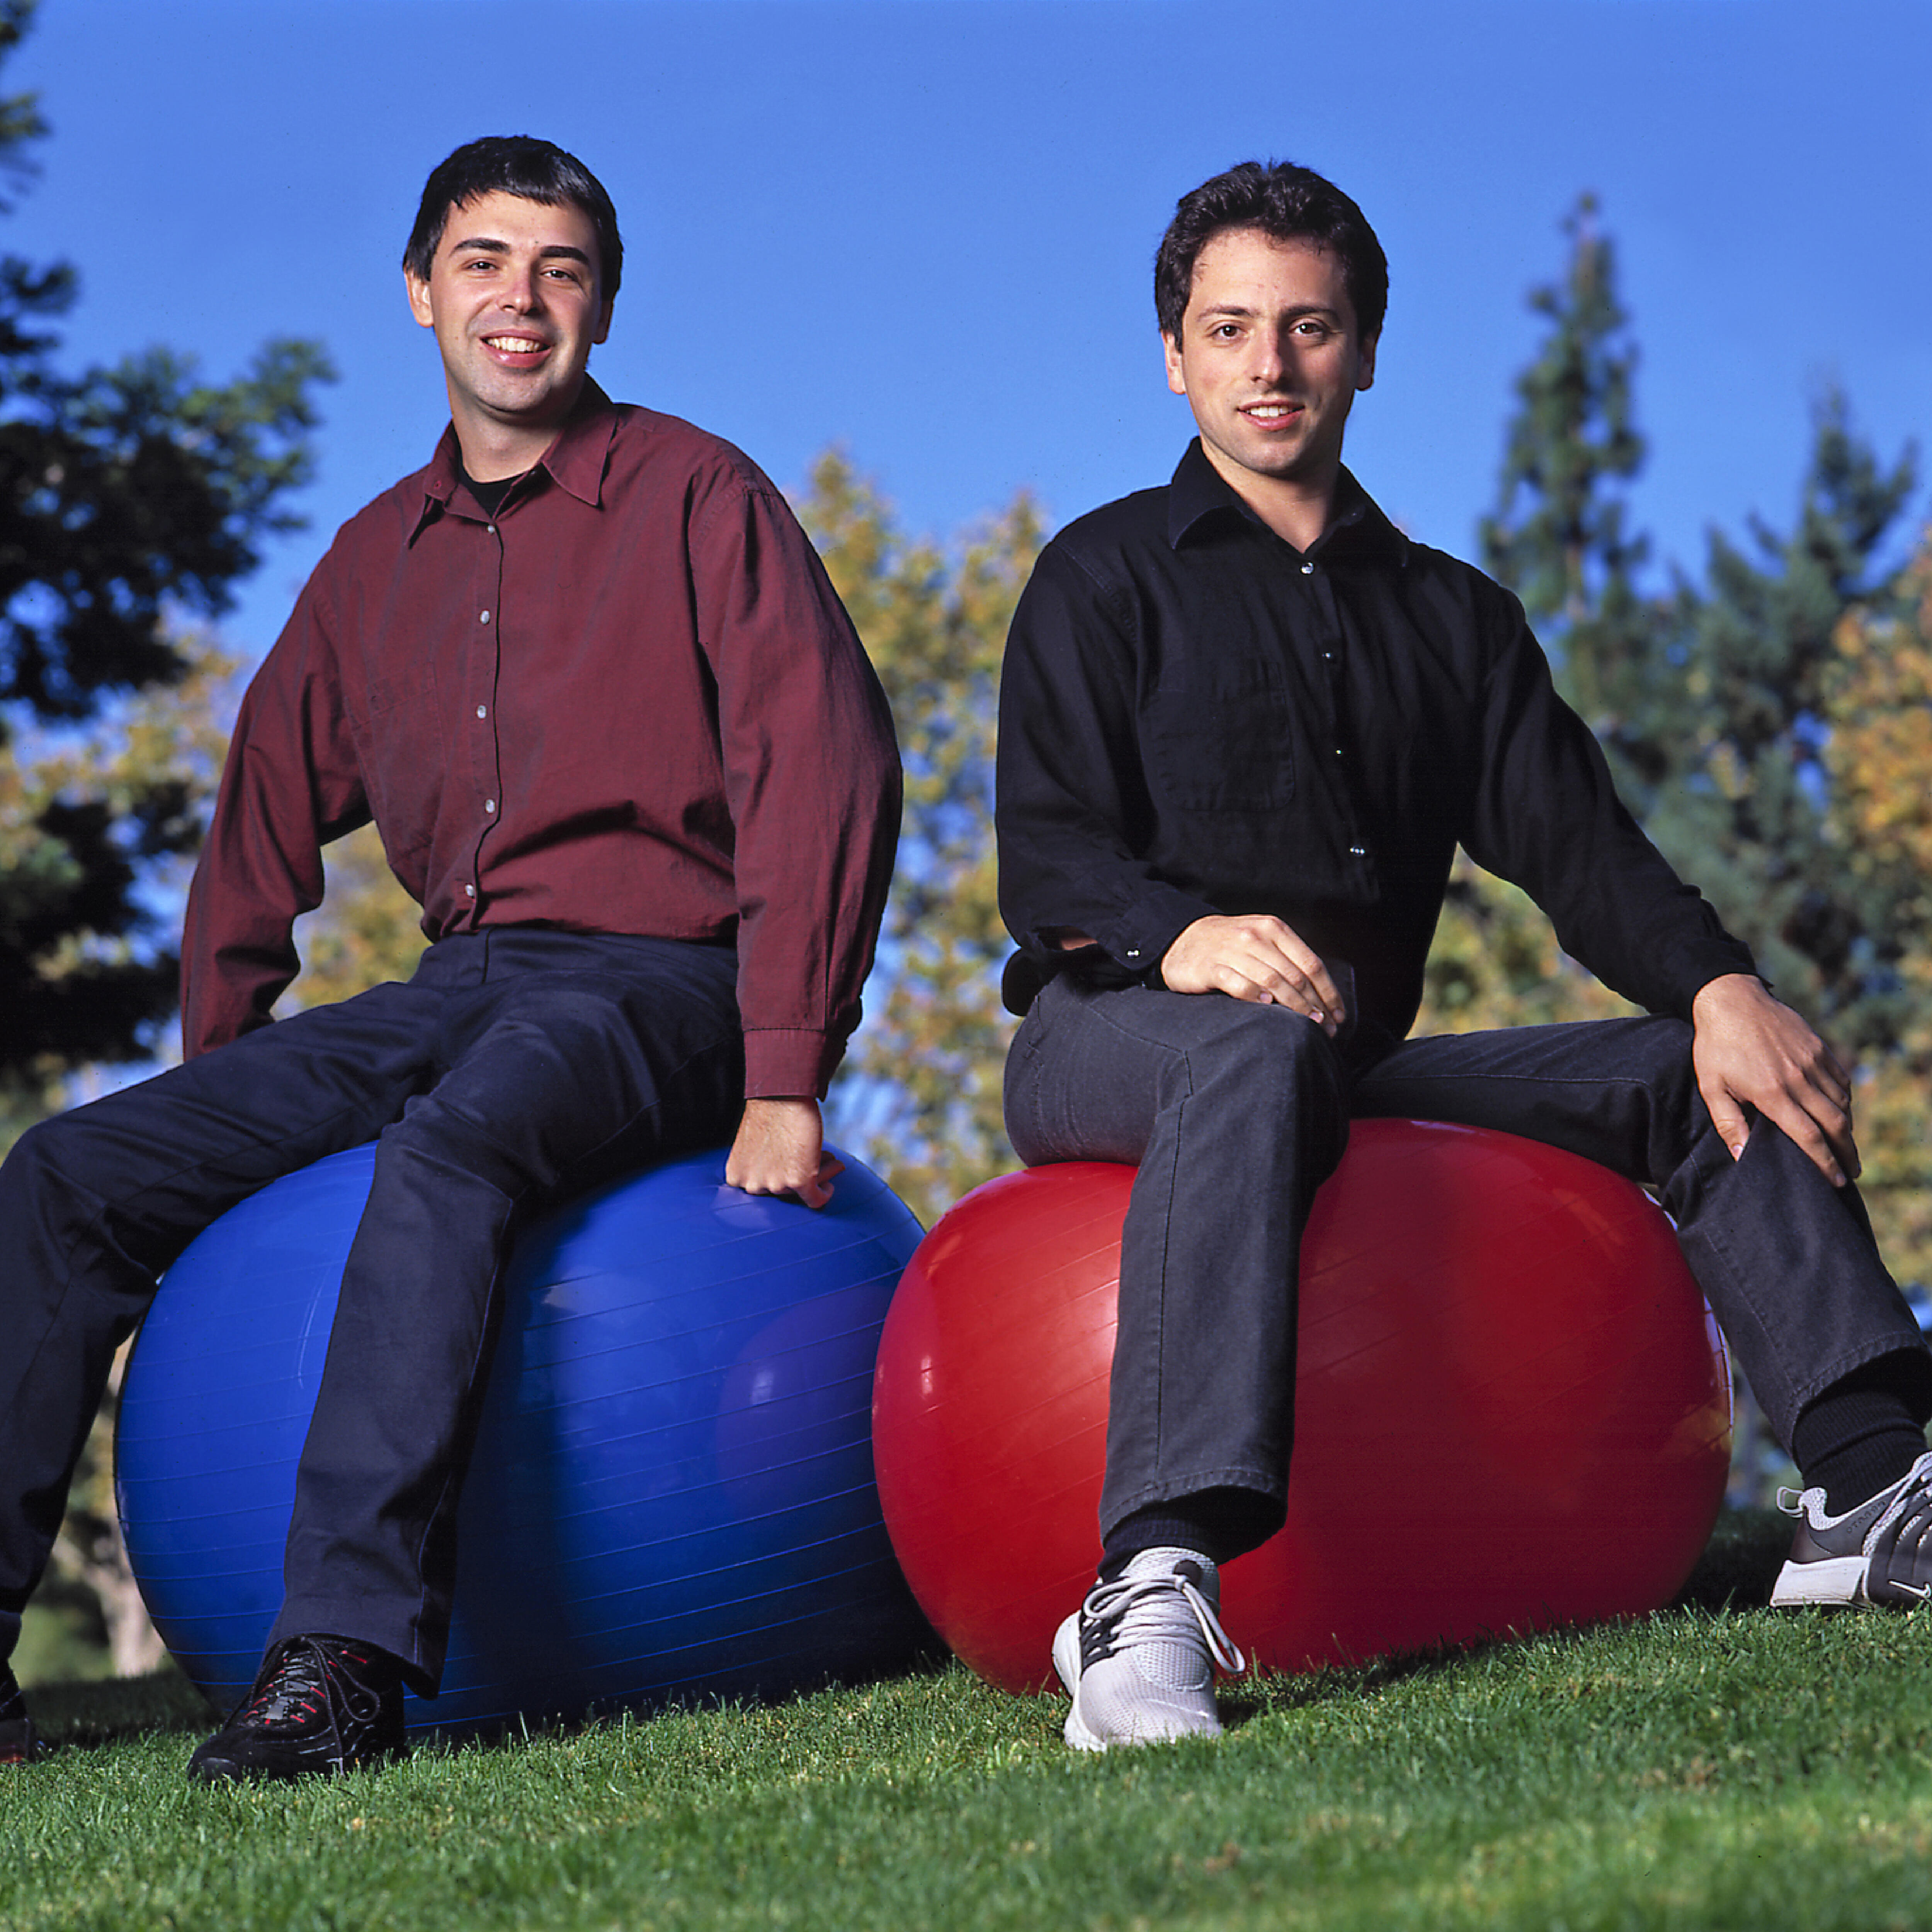 Larry Page & Sergey Brin